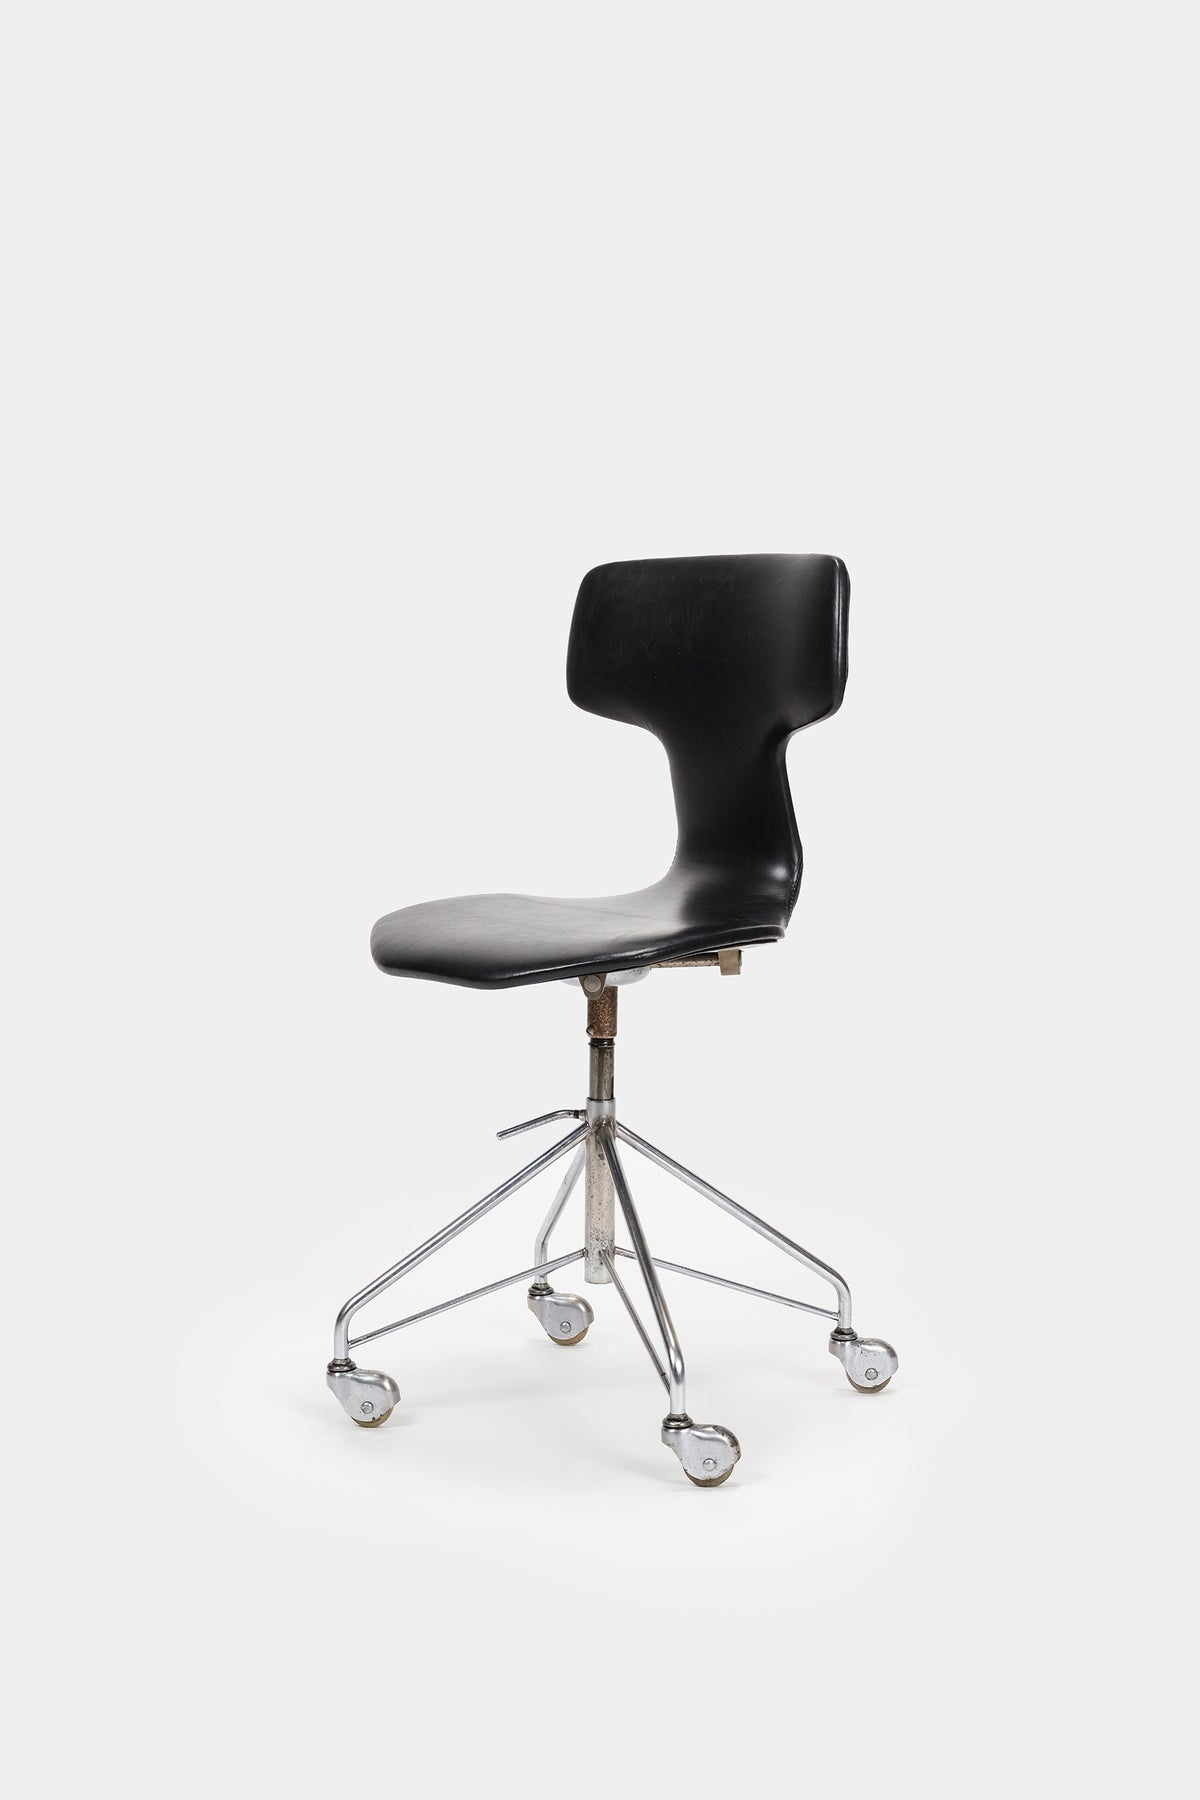 Arne Jacobsen, Office Chair, Leather, Fritz Hansen, 60s